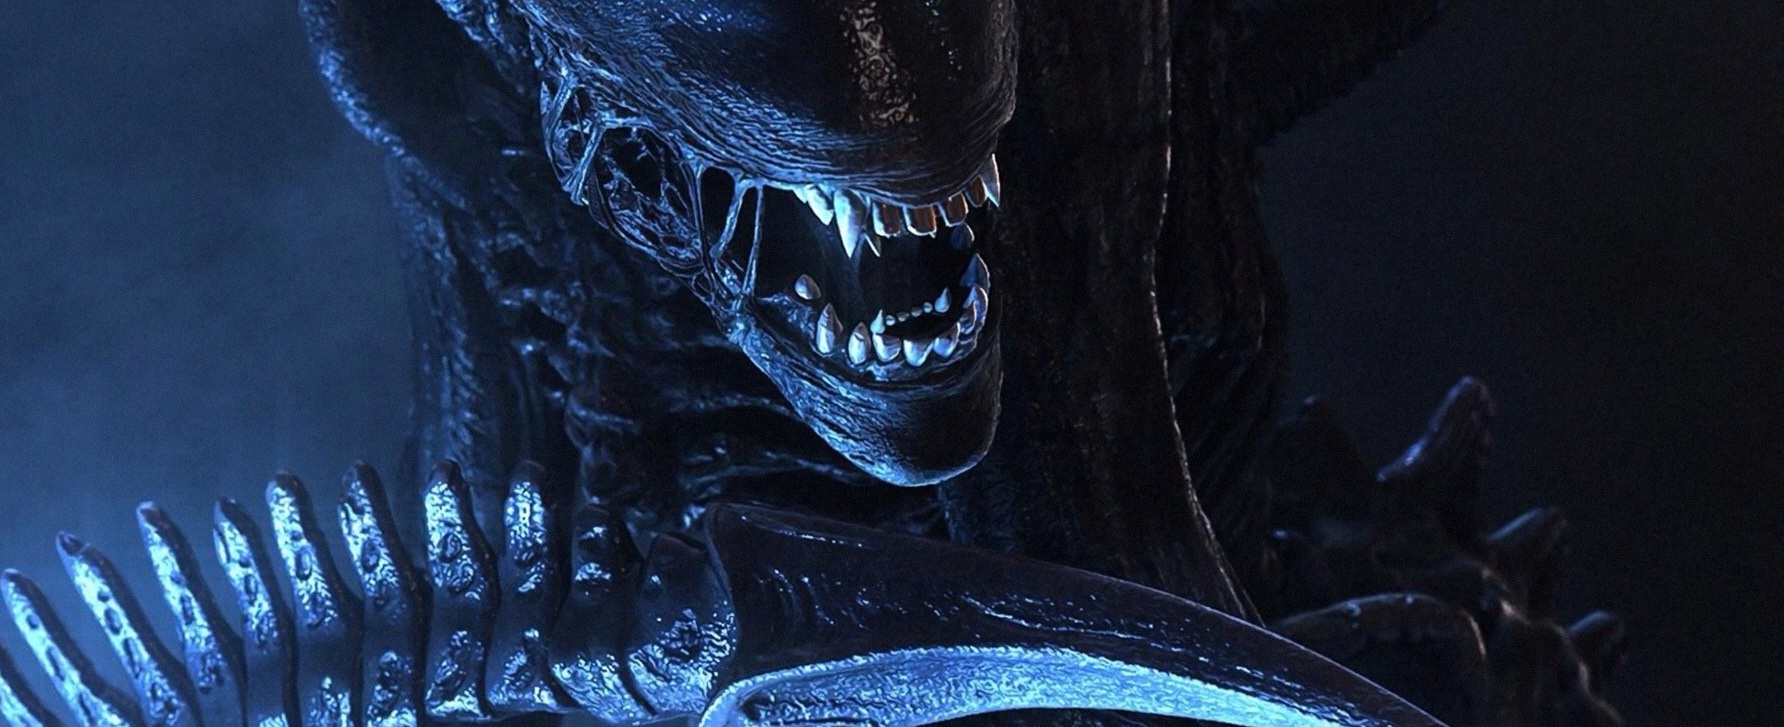 Alien Blu-ray Steelbook is up for pre order in the UK